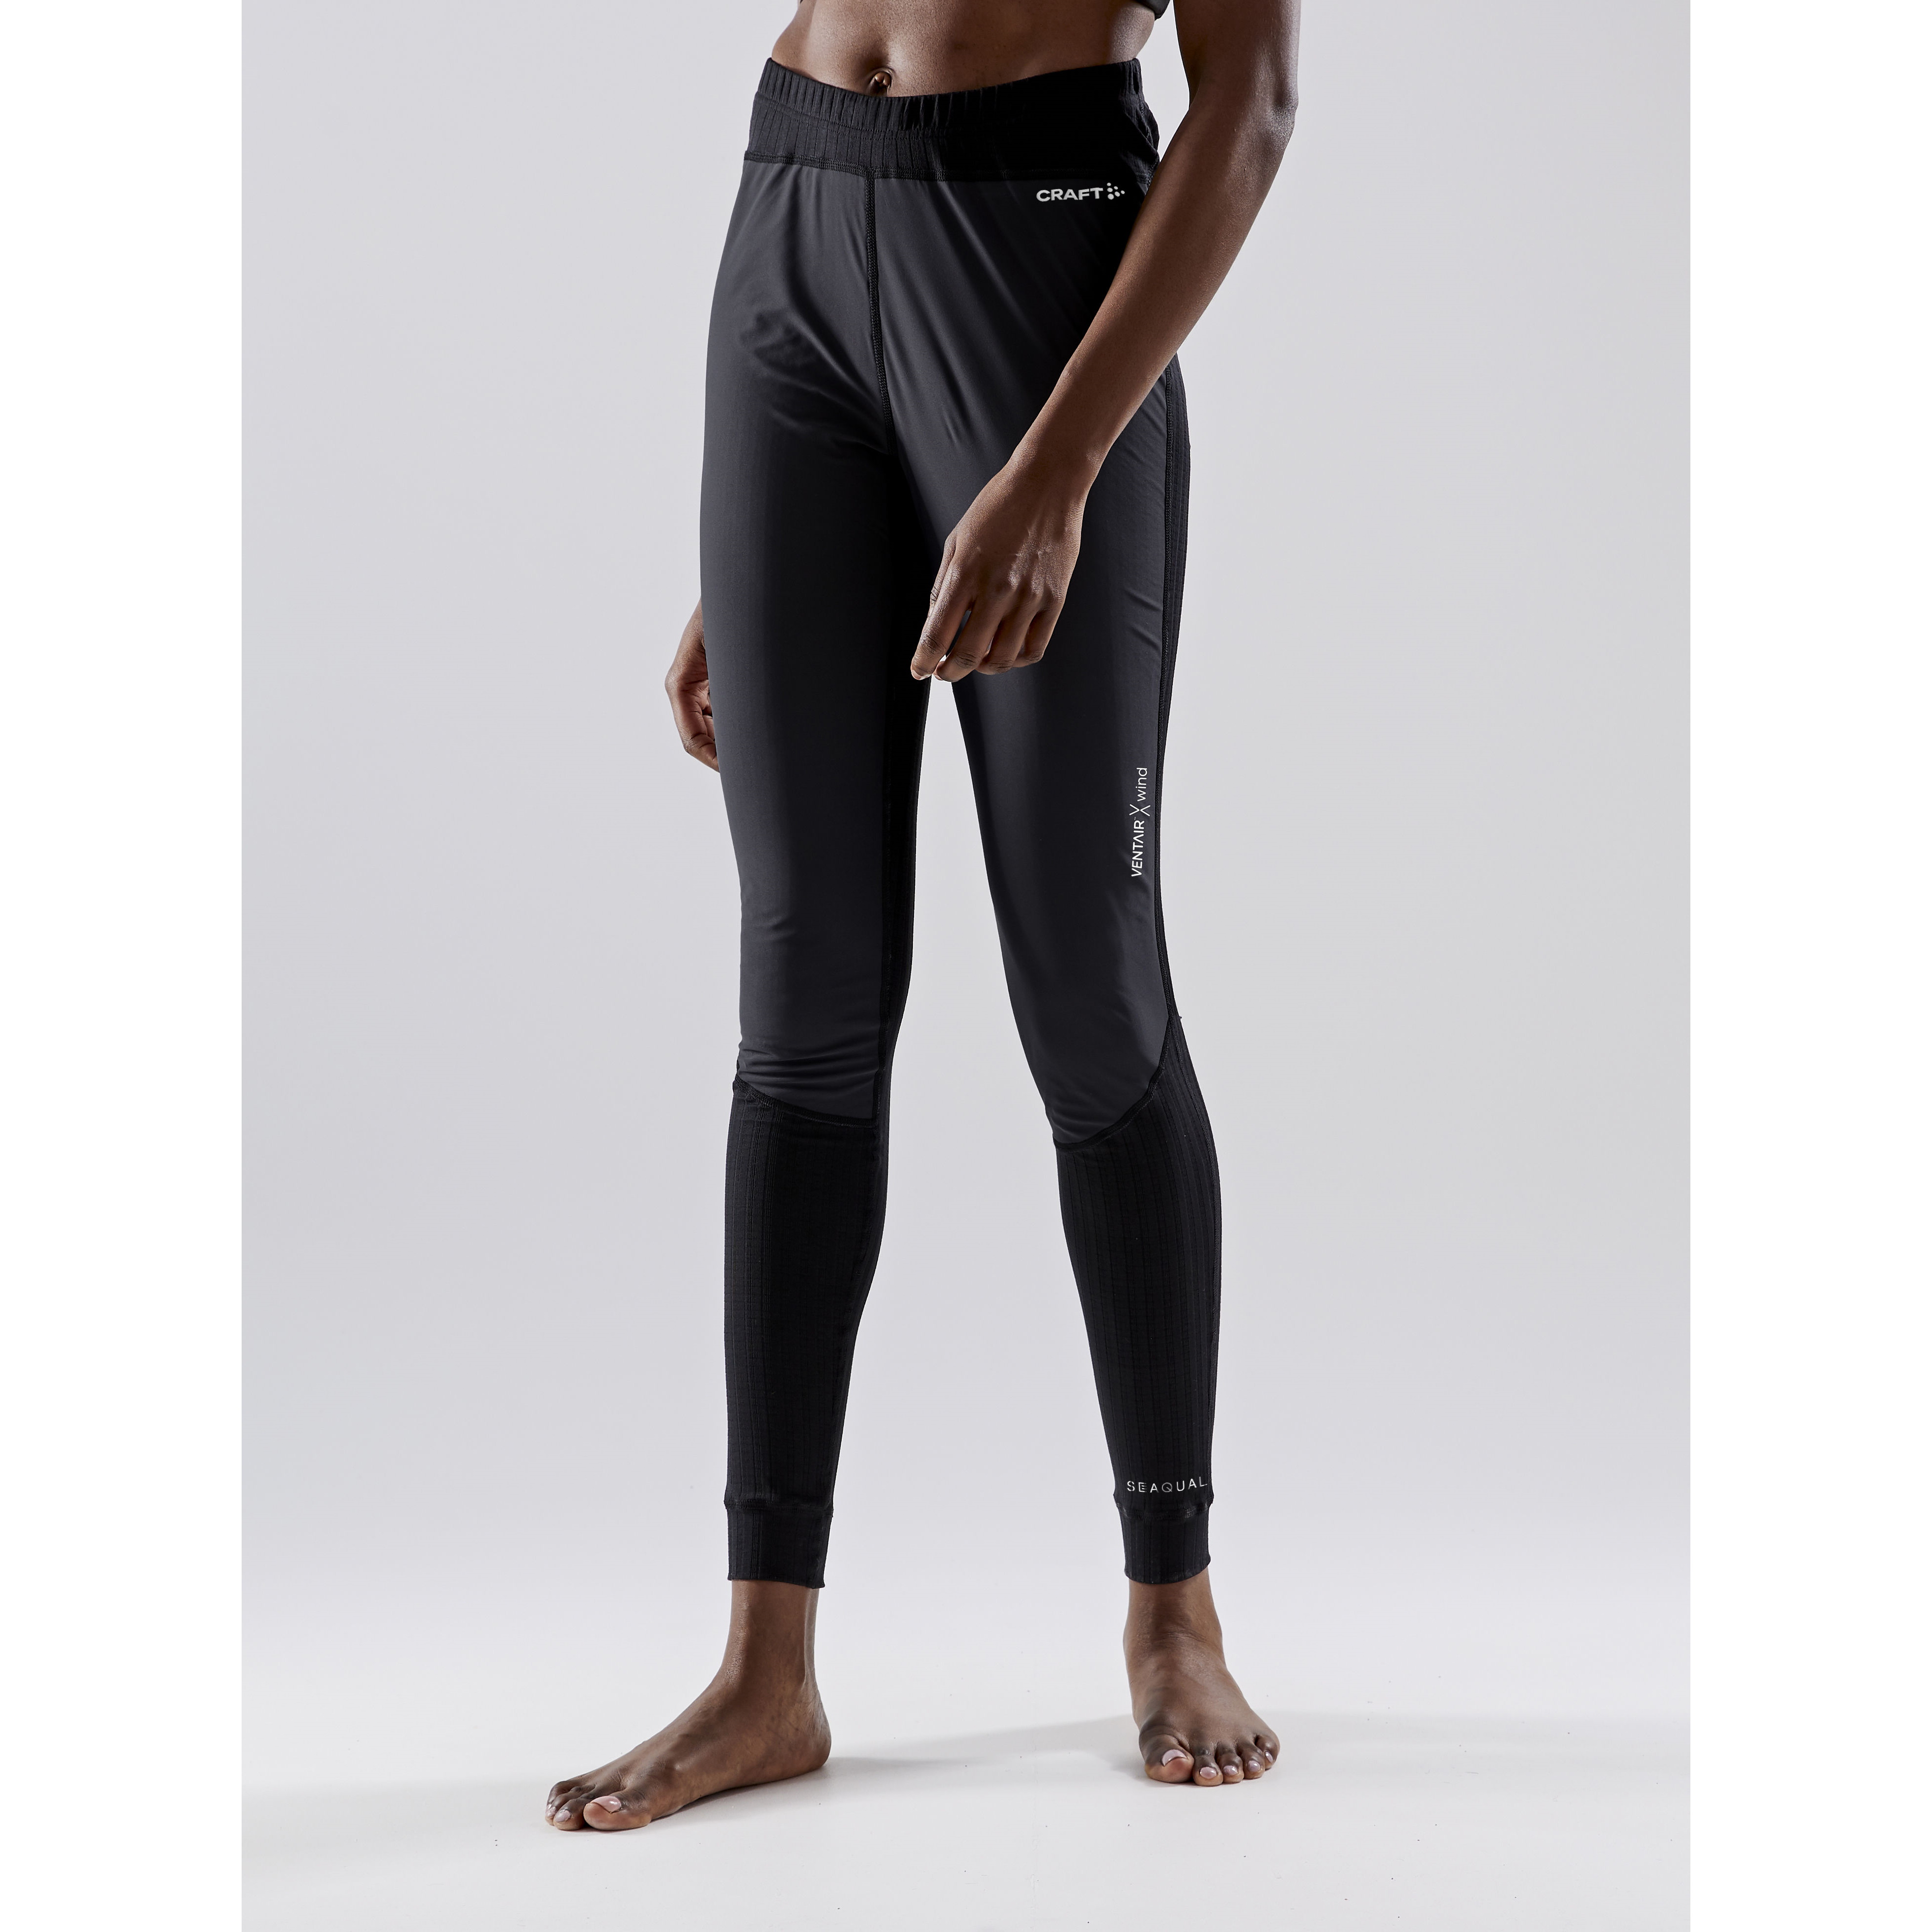 Women's Active Extreme X Wind Pants Black/Granite | Buy Women's 